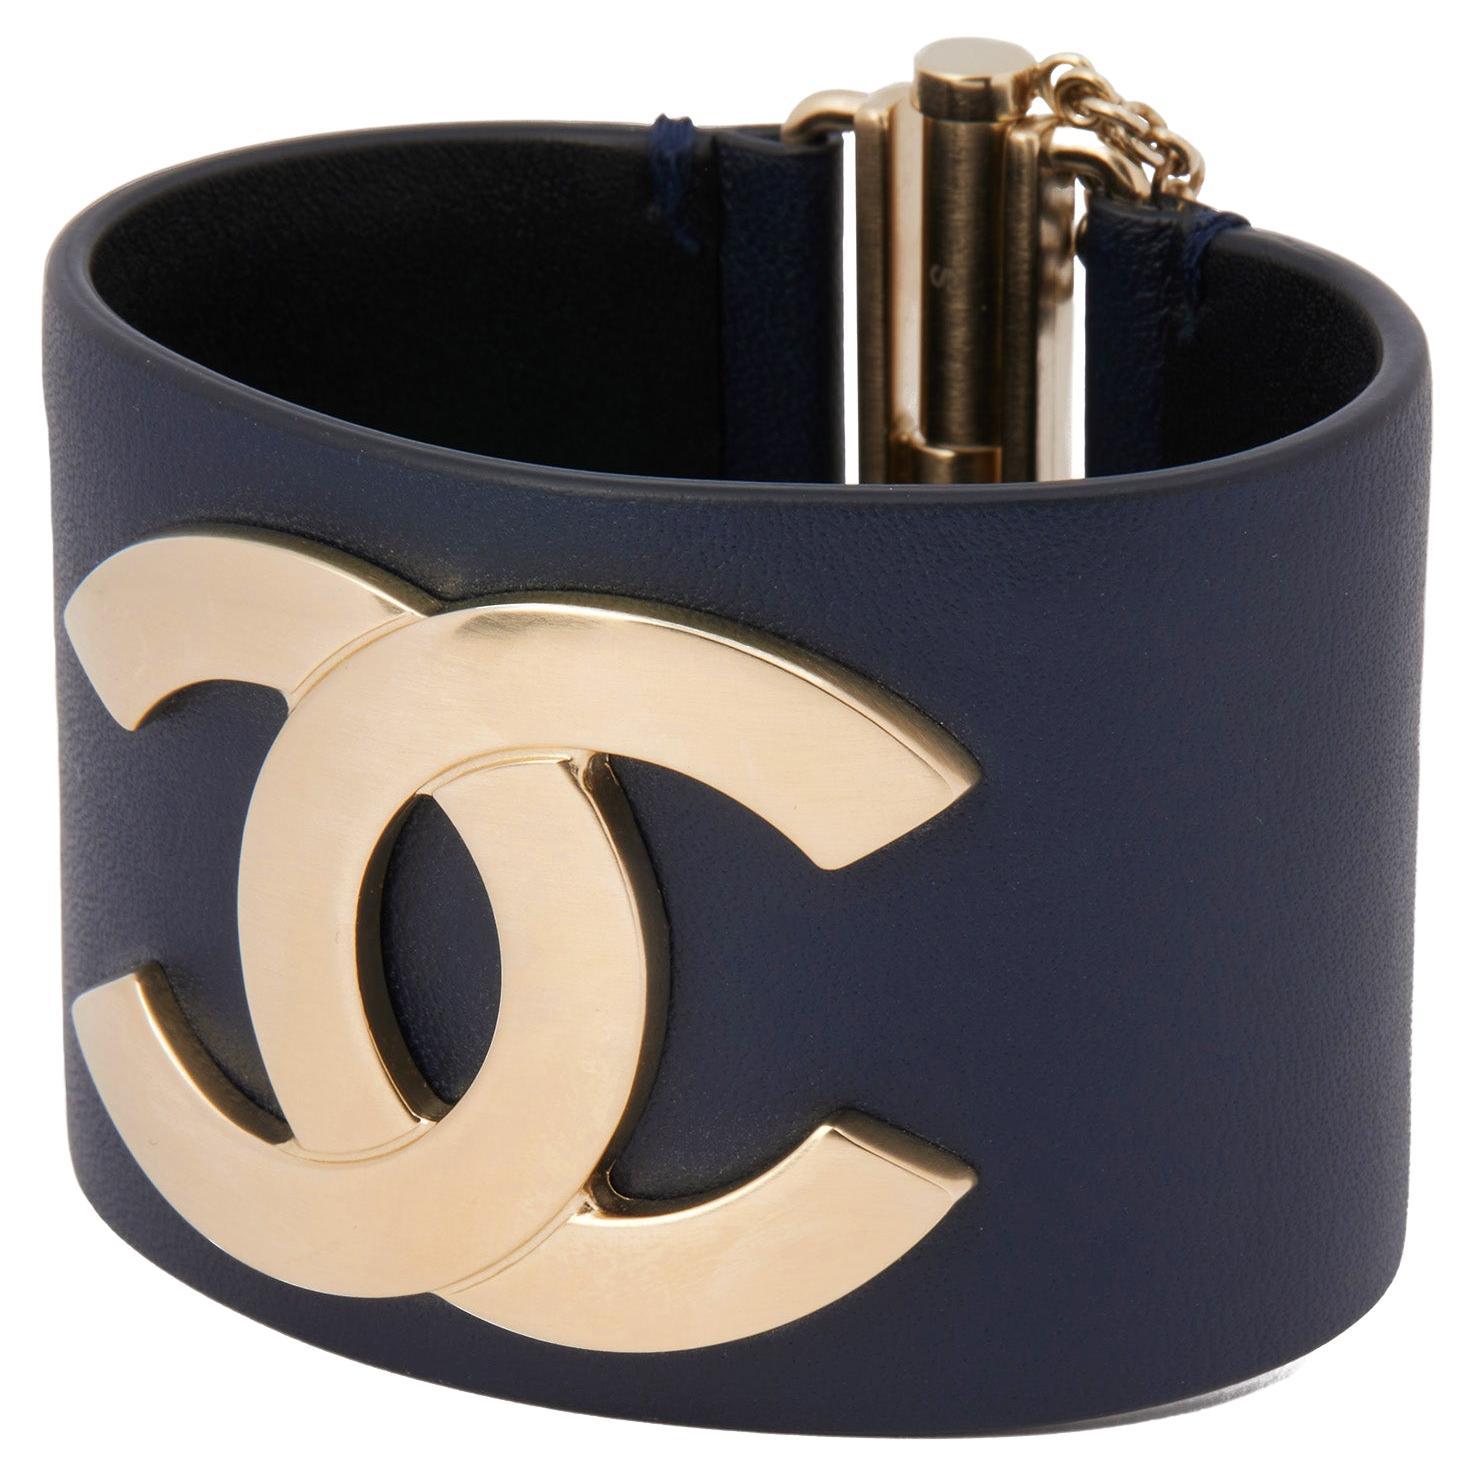 Chanel Navy Lambskin Leather Gold CC Bracelet